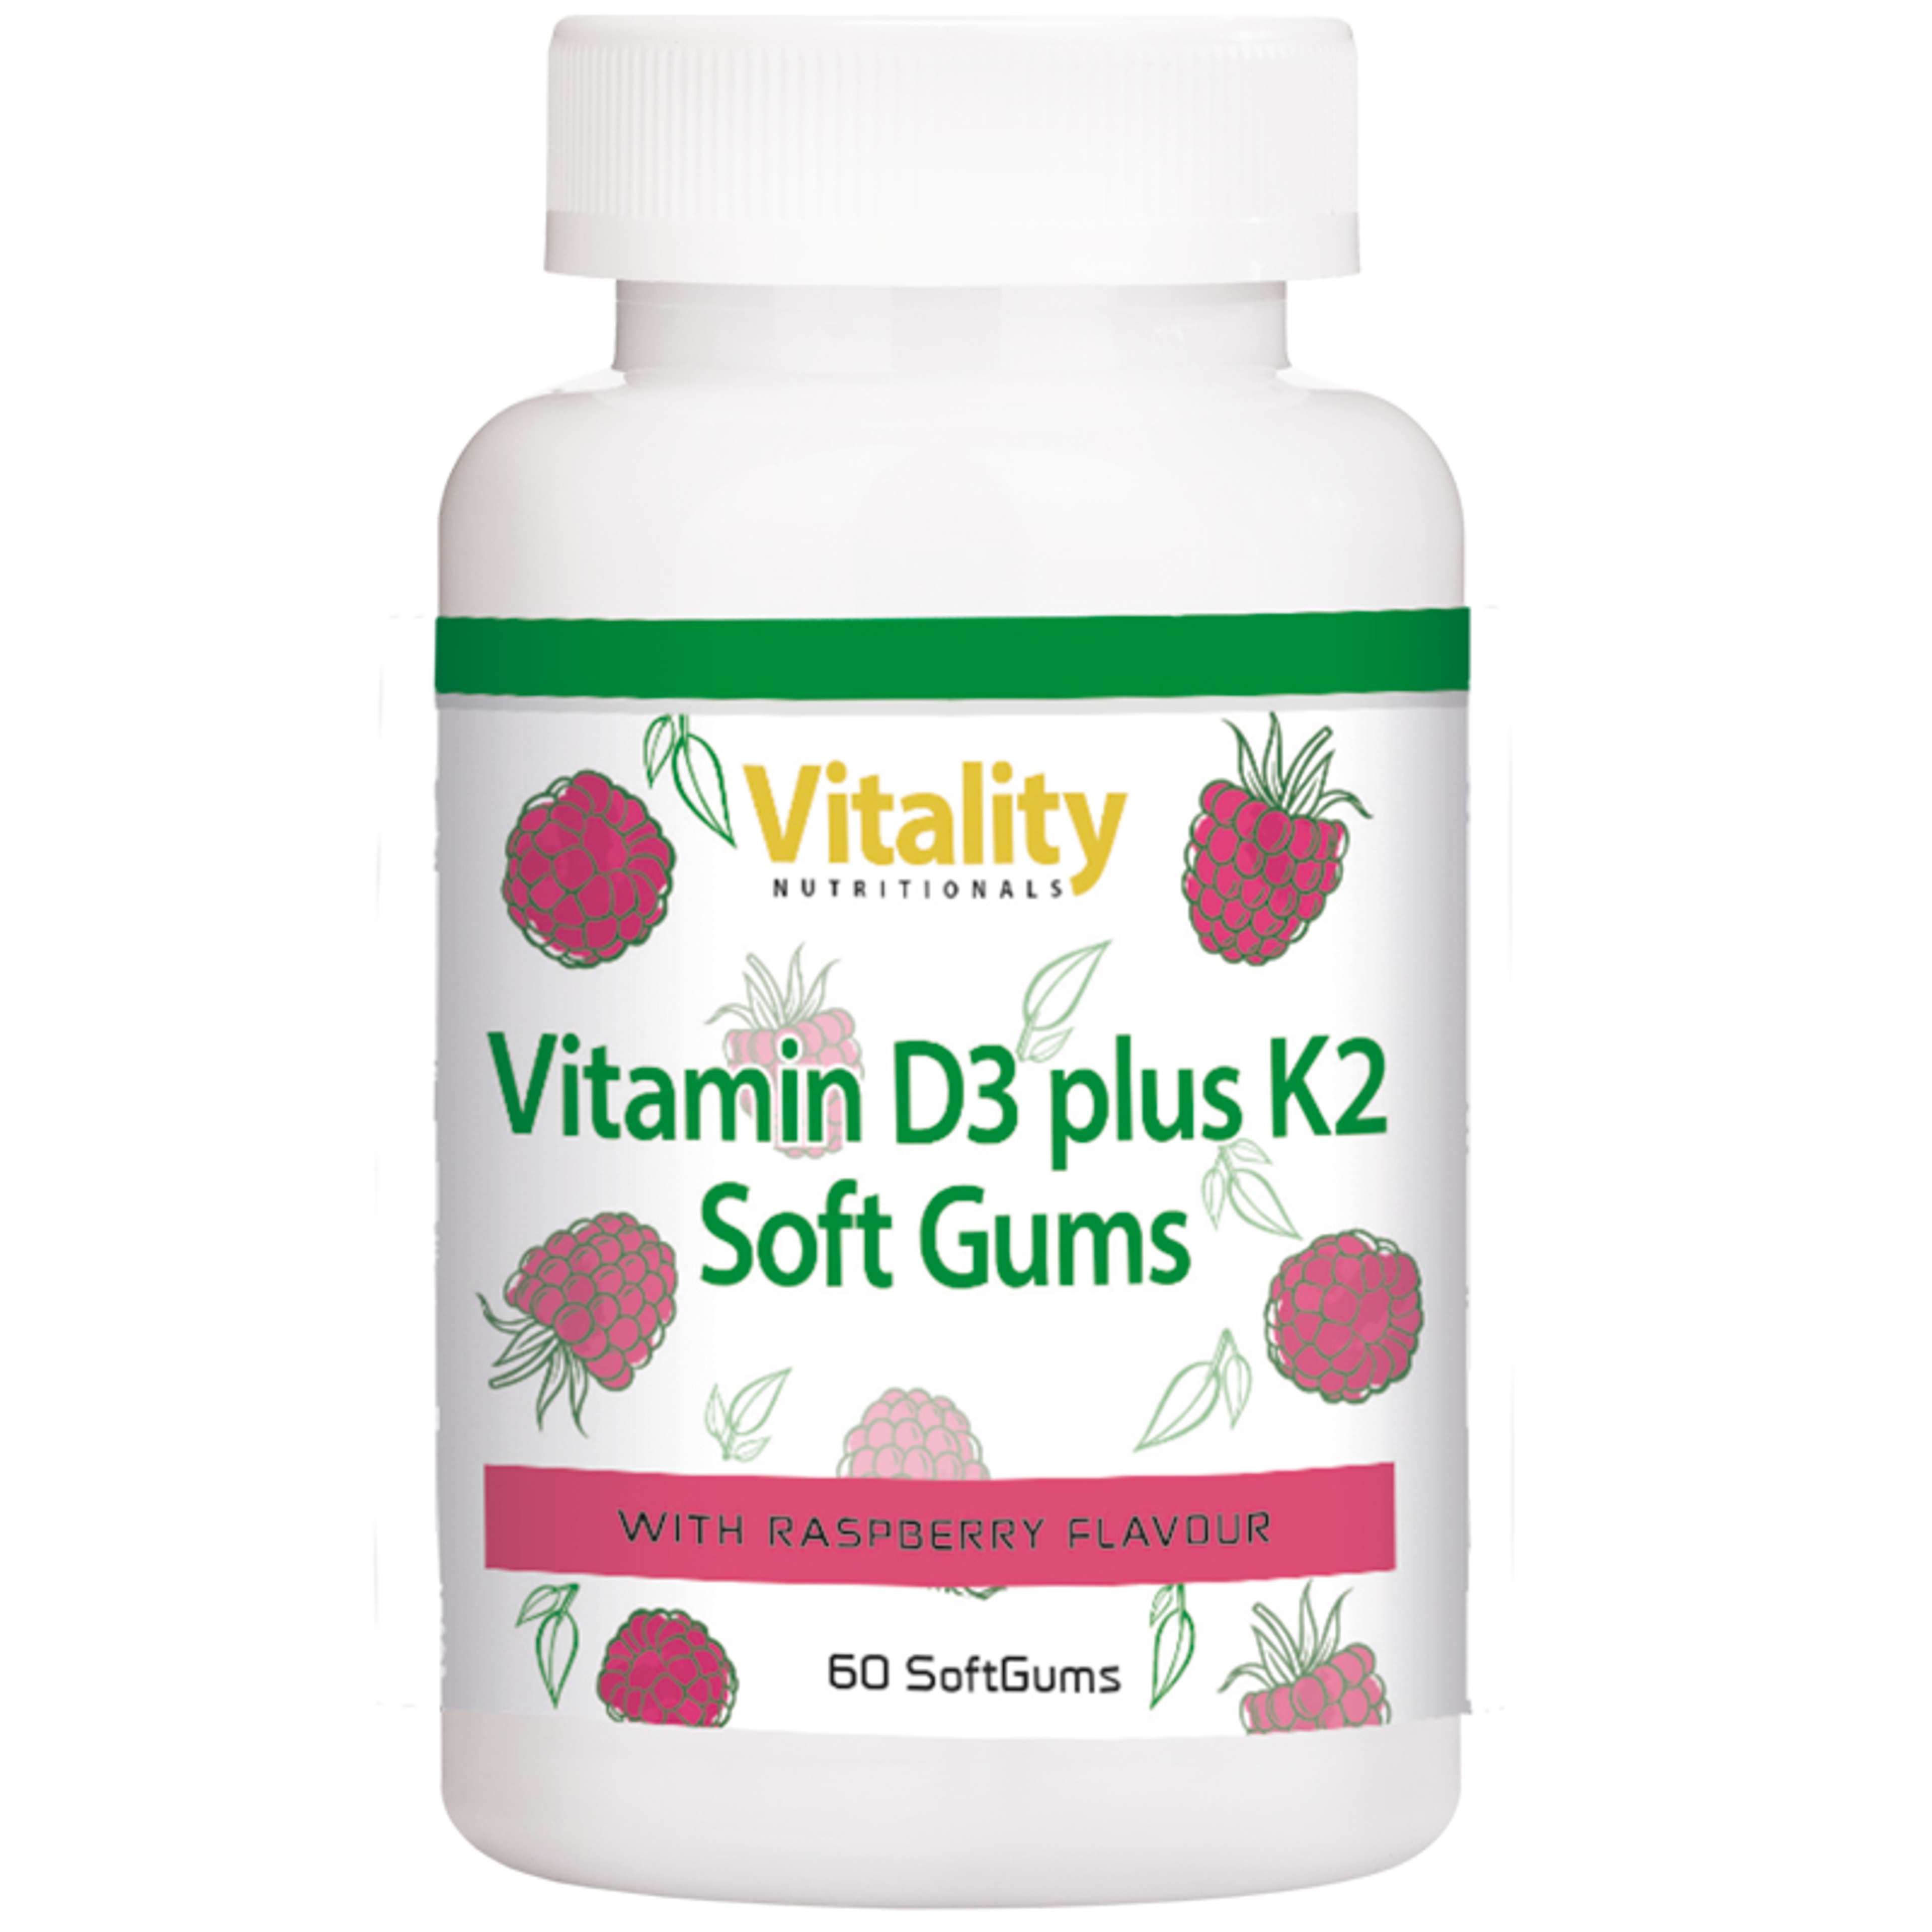 Vitality-Nutritionals-Vitamin-D3-plus-K2-Soft-Gums.jpg